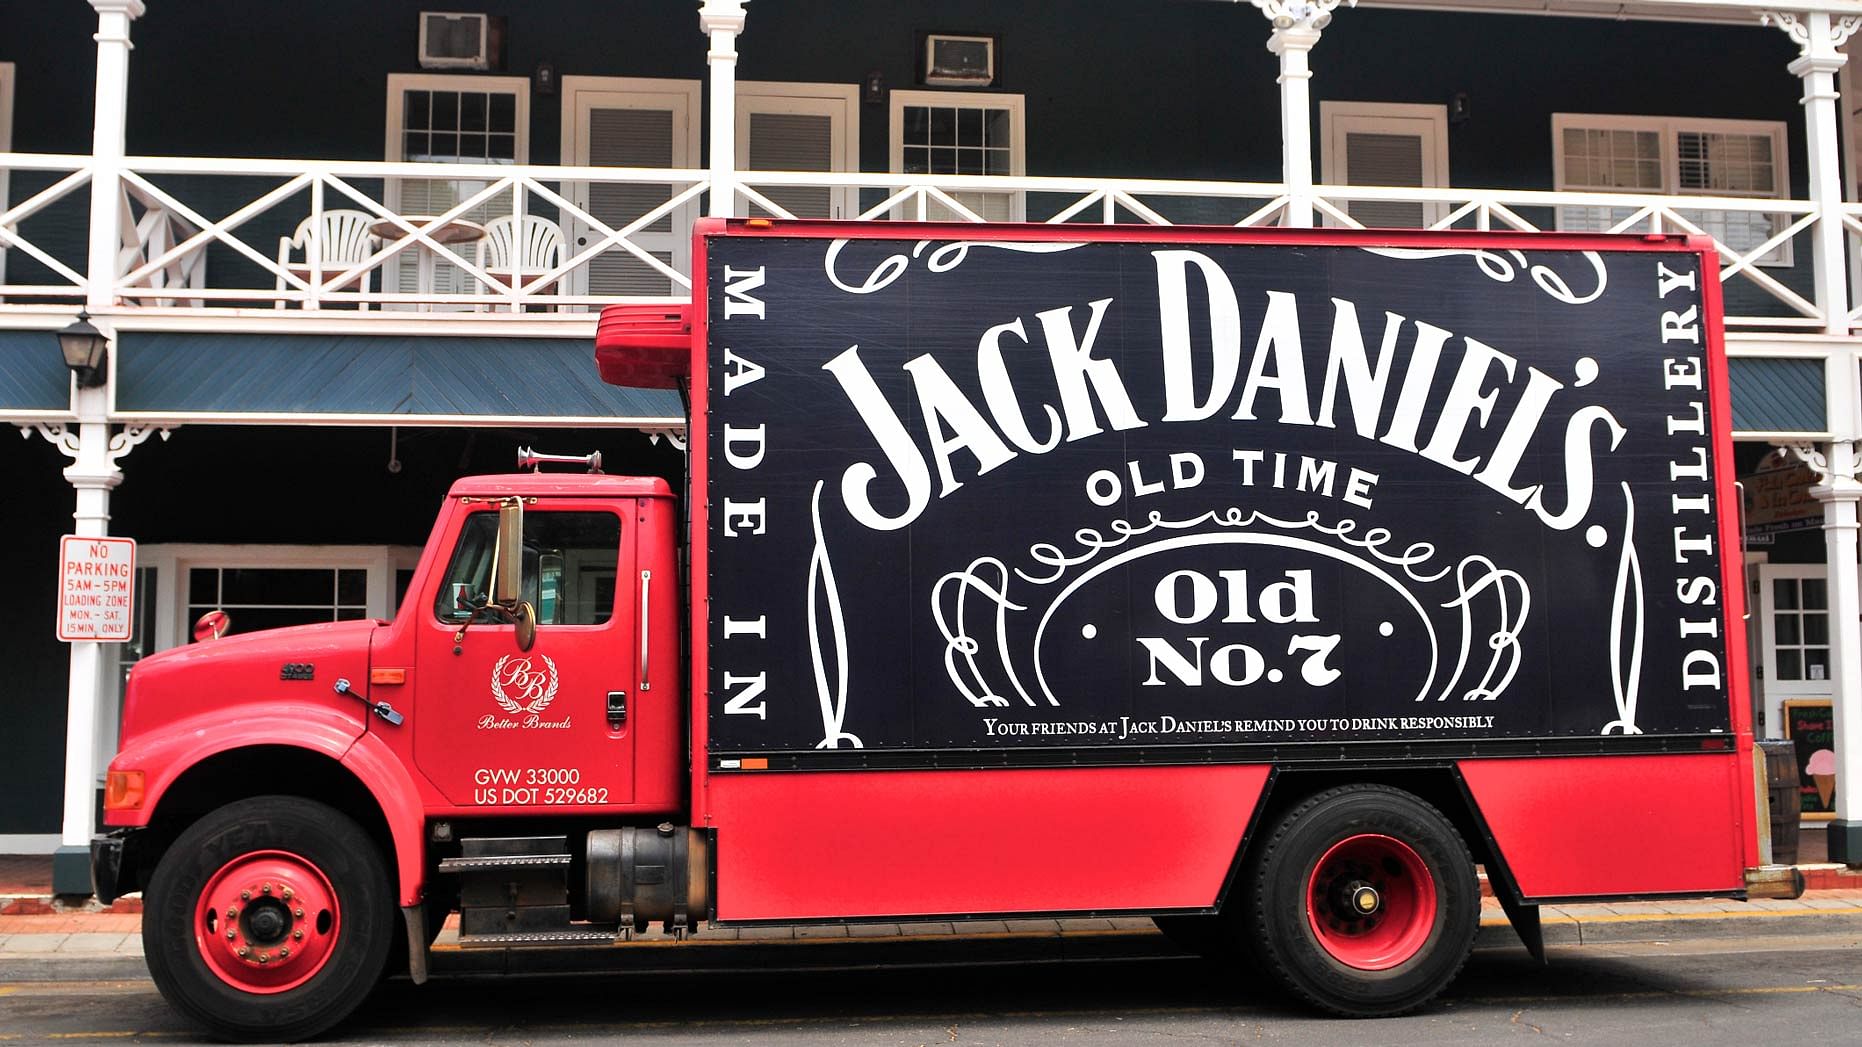 Jack Daniels truck in Tennessee. (Photo: iStock)